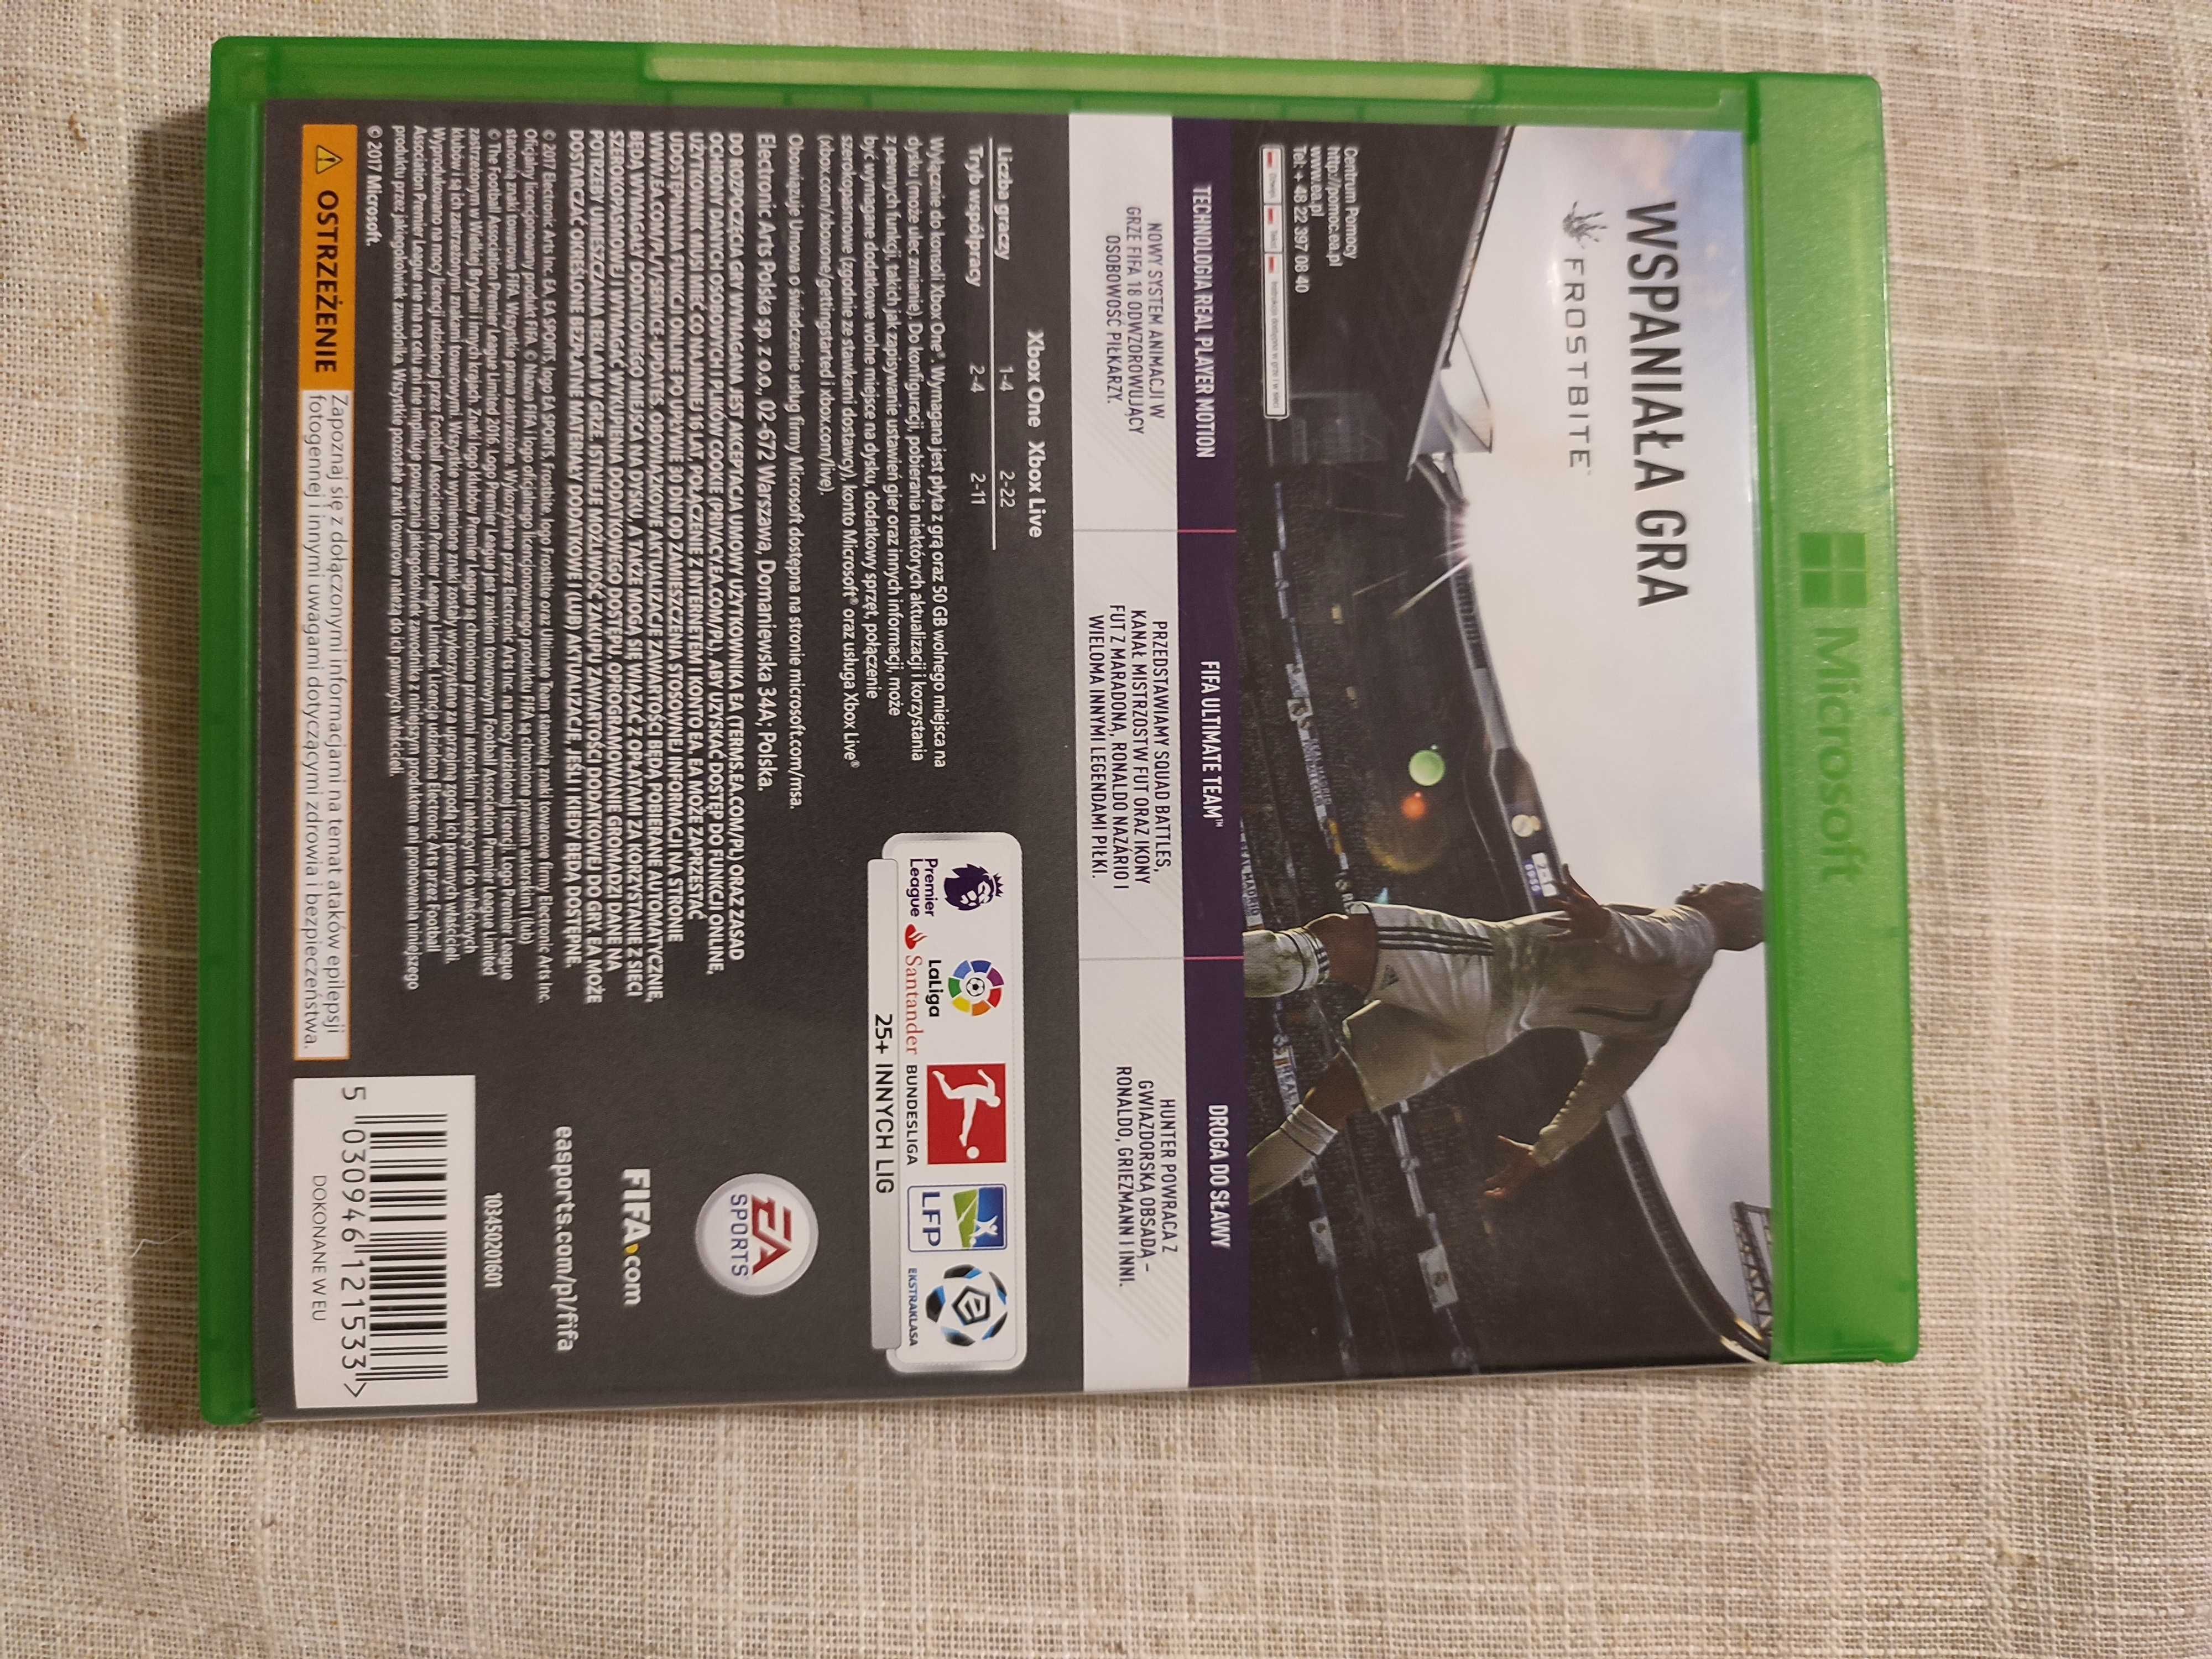 FIFA 18 - gra Xbox One